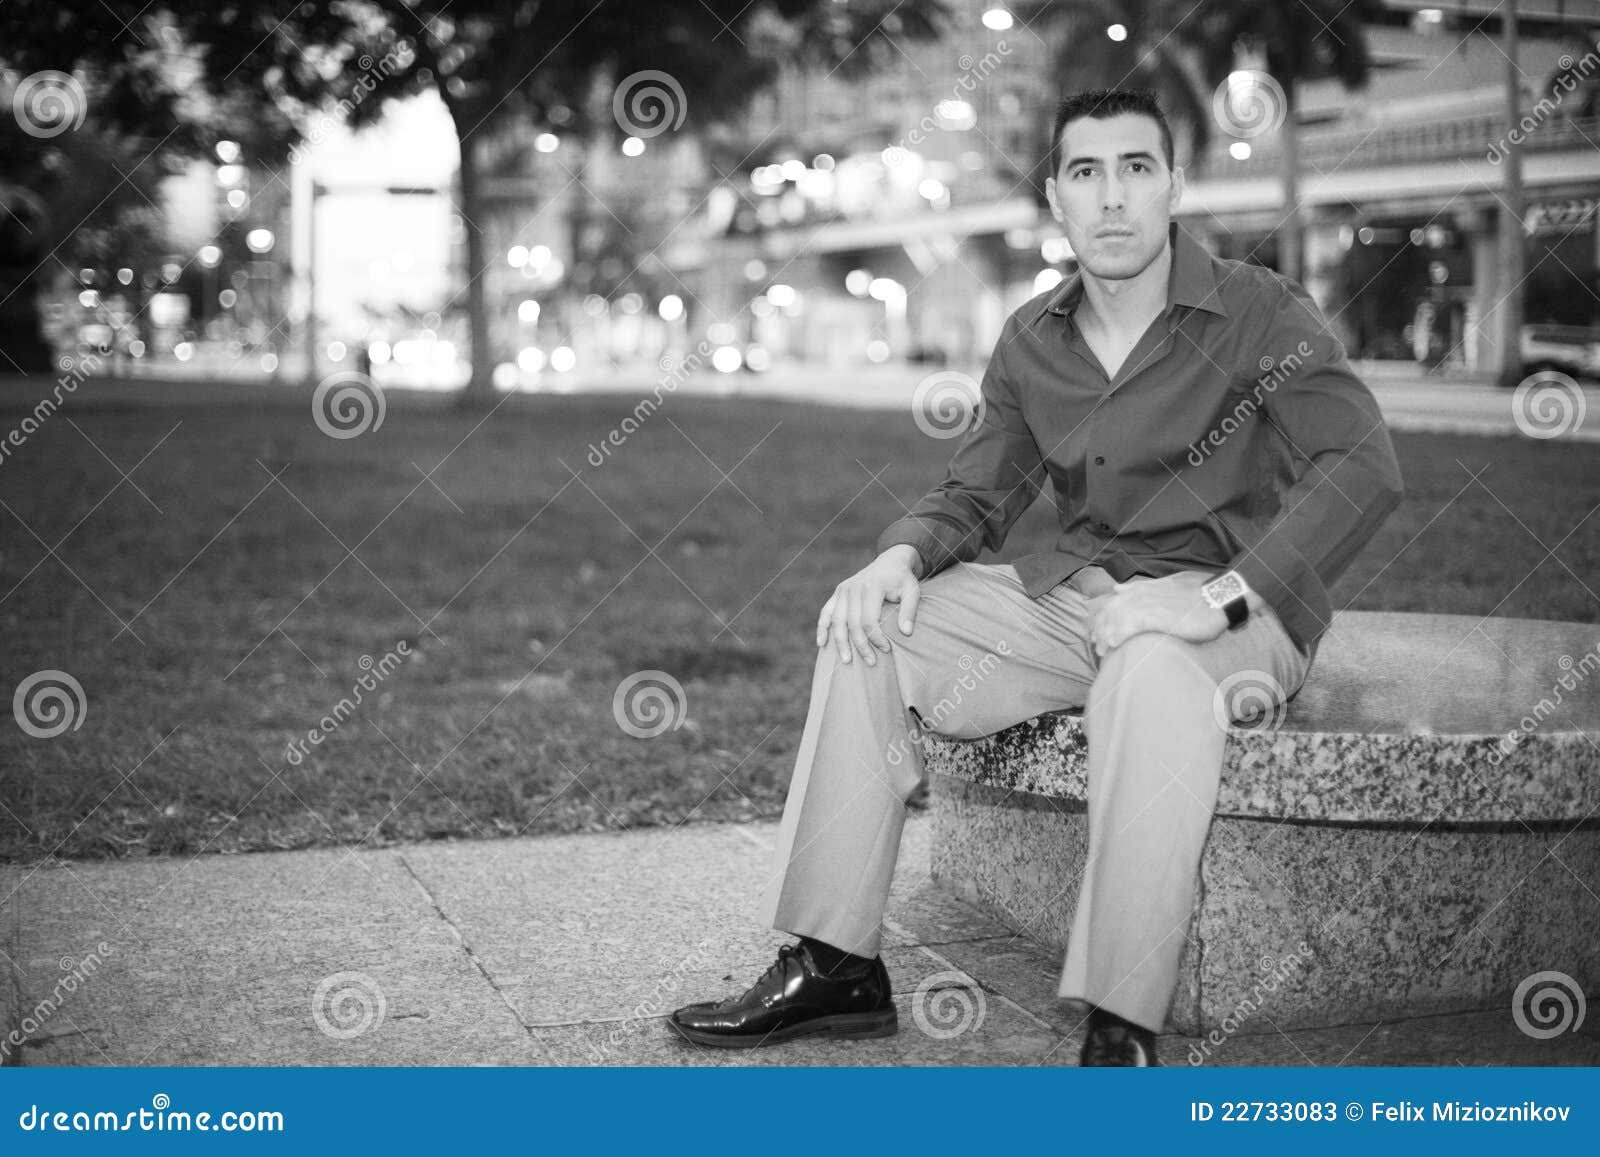 Man Sitting on a Park Bench Stock Image - Image of hispanic, black ...